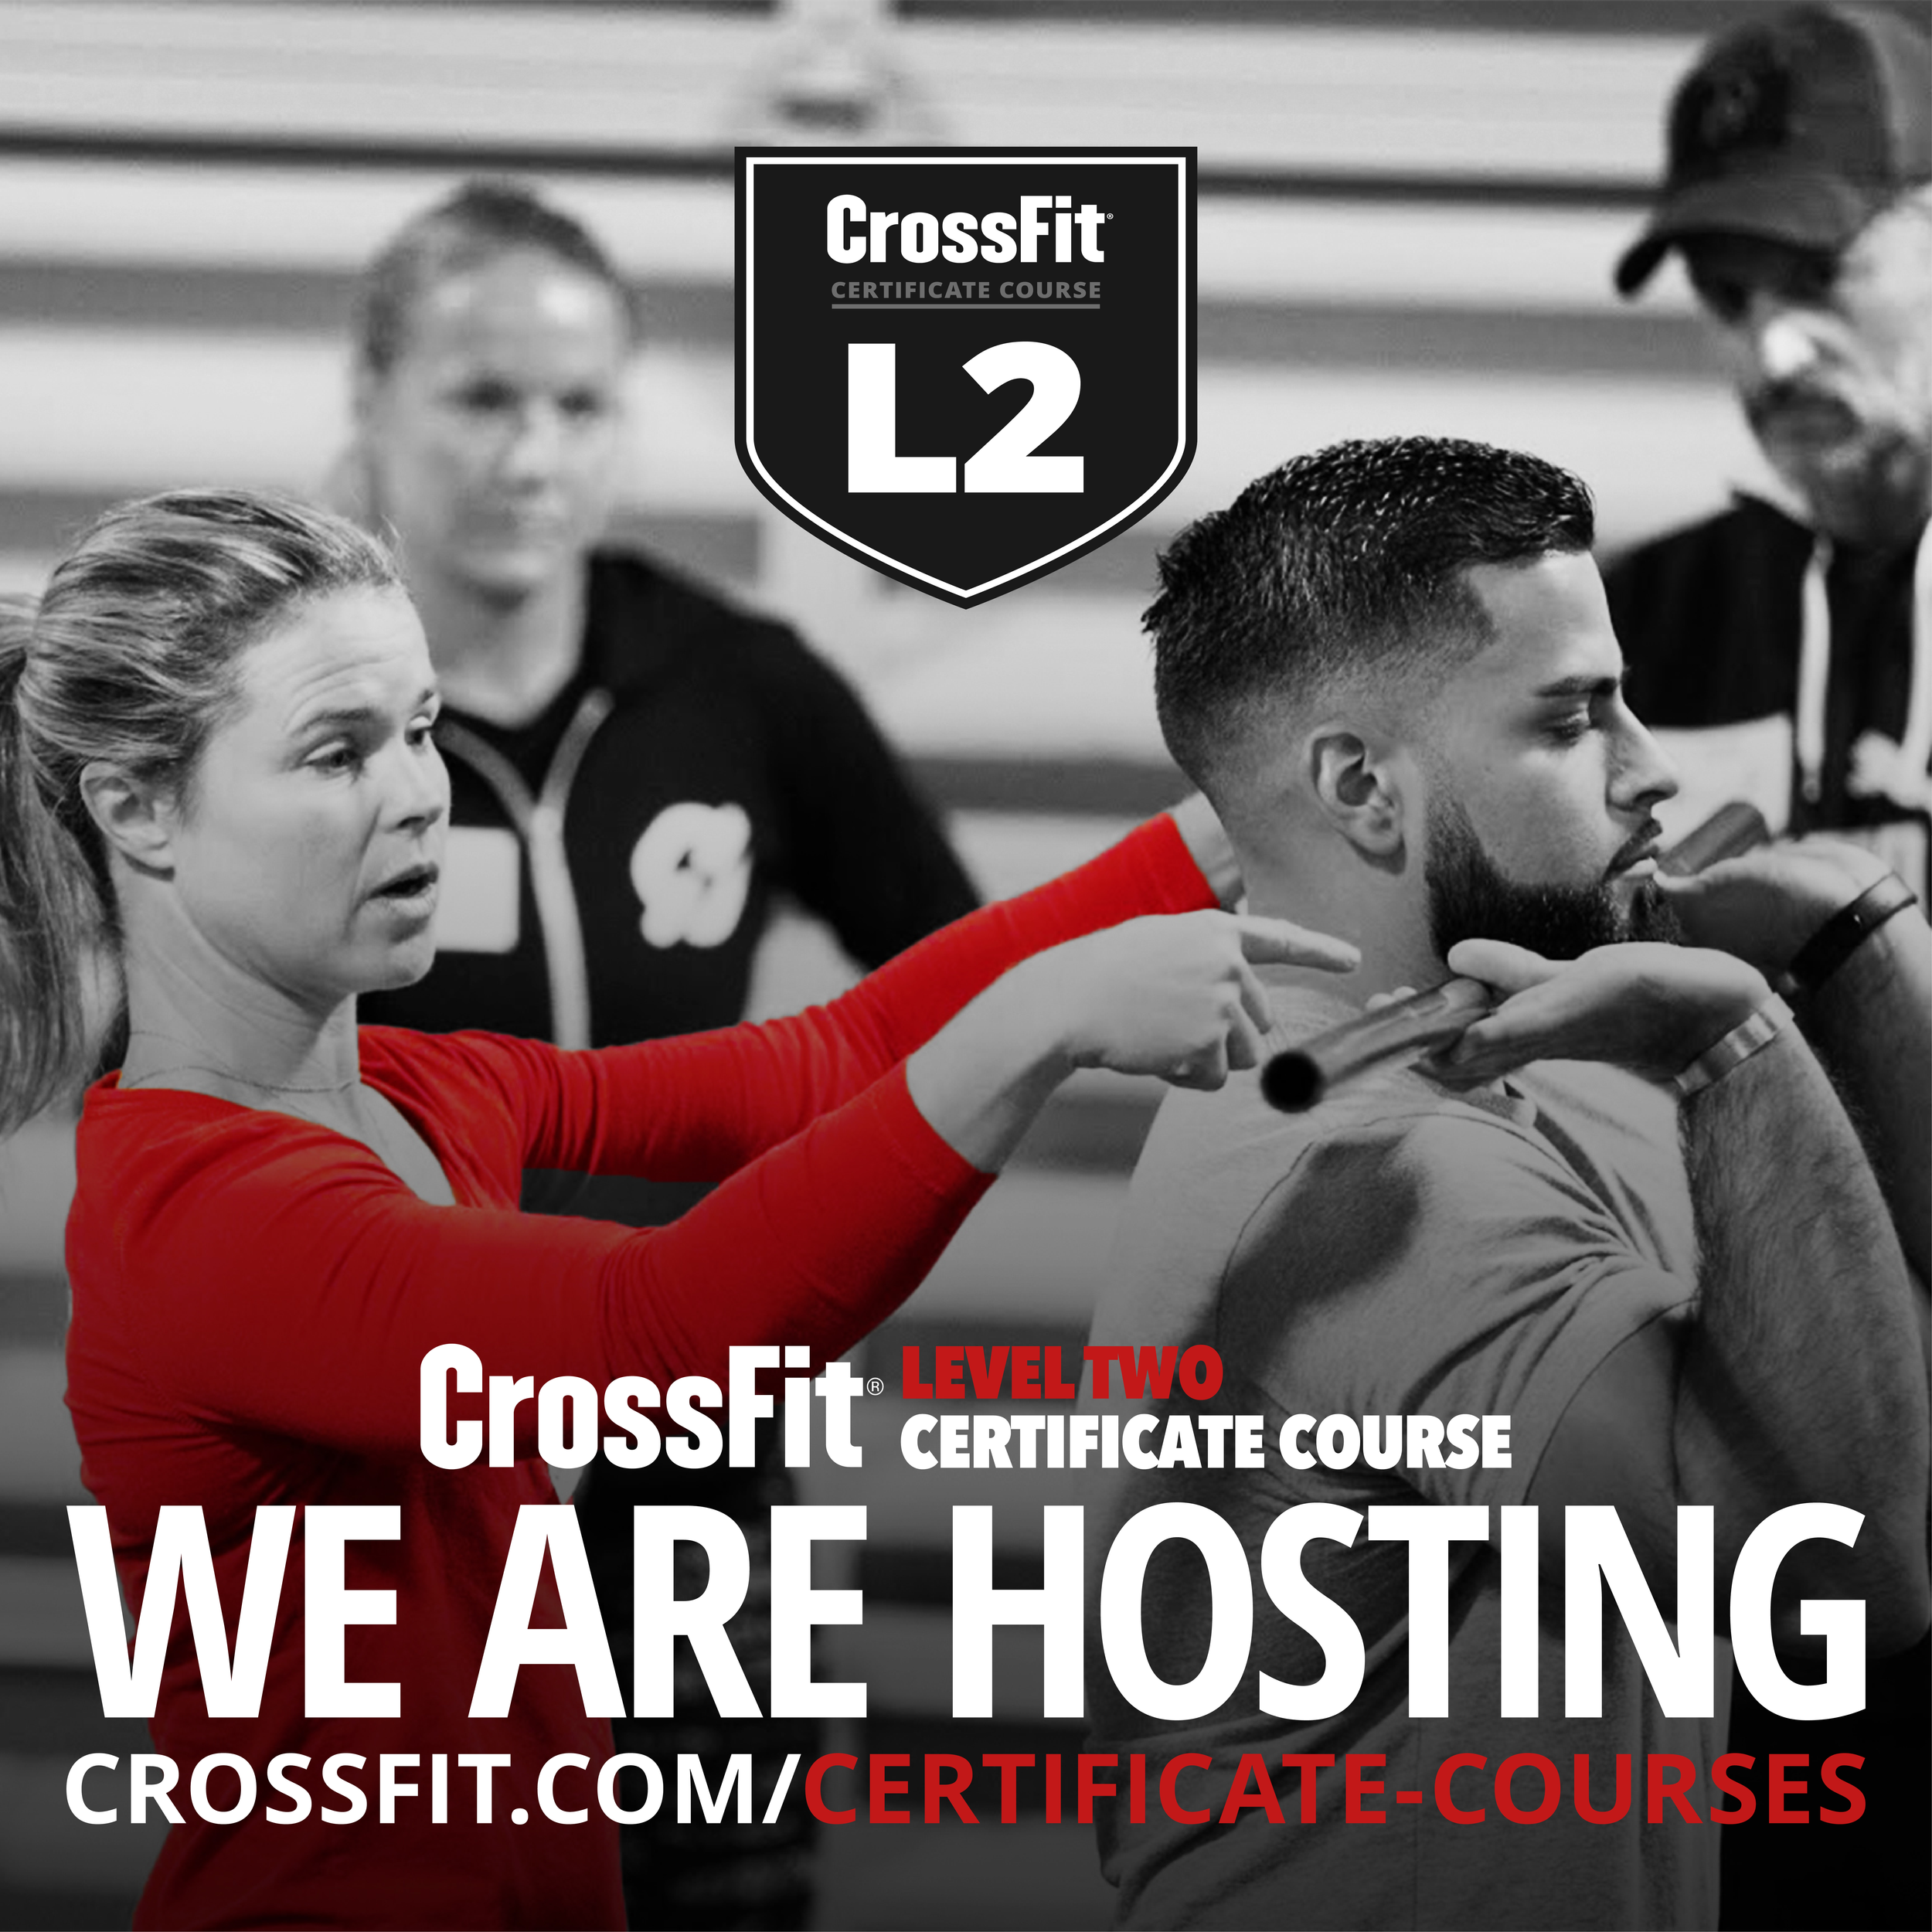 CrossFit, Course Photos